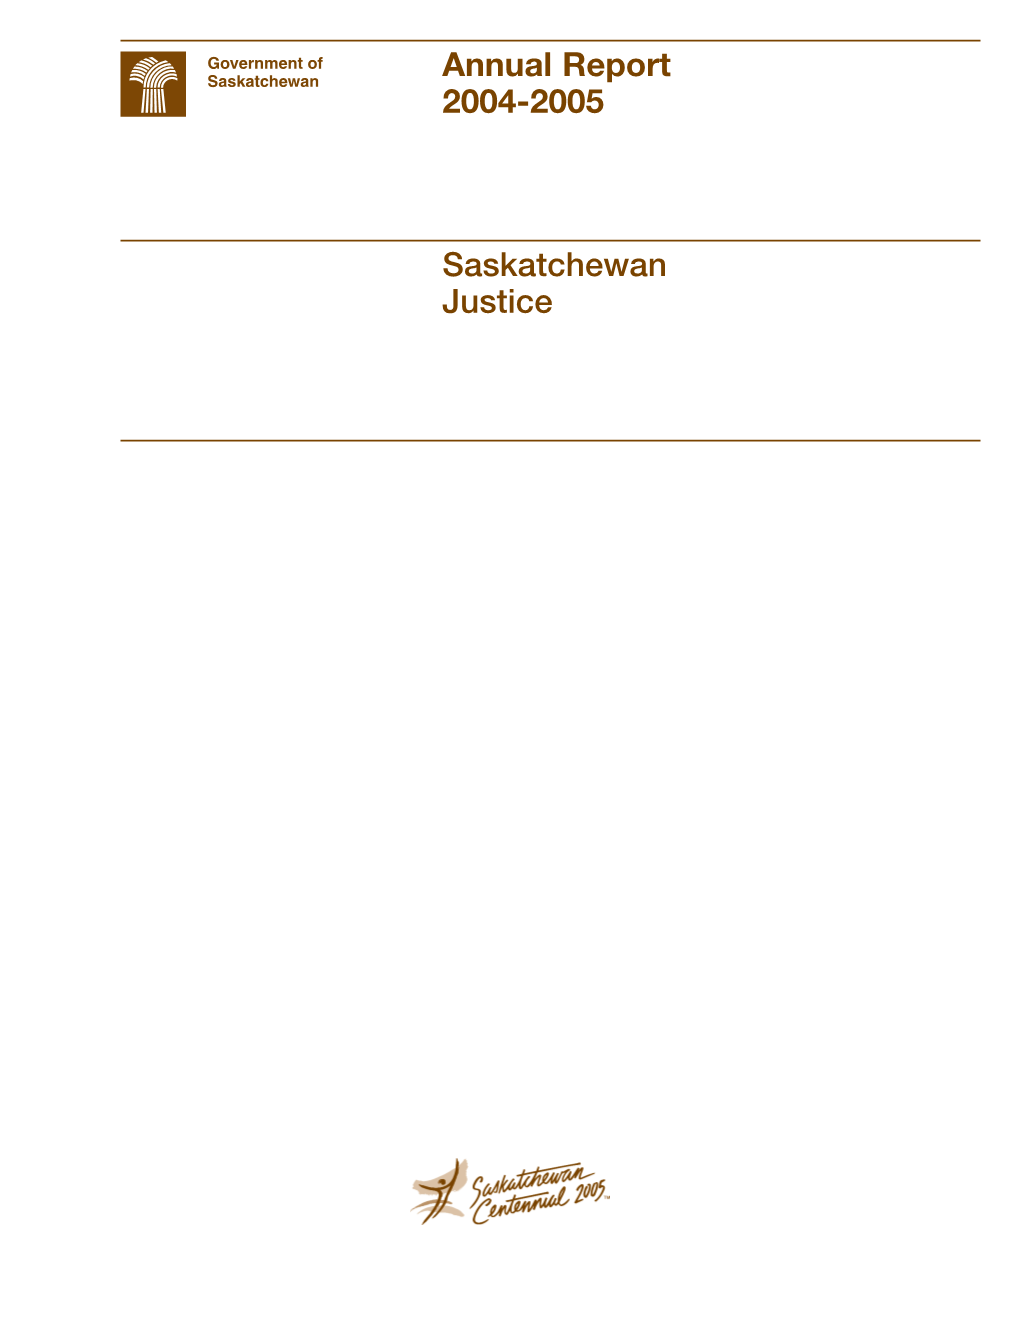 Annual Report 2004-2005 Saskatchewan Justice